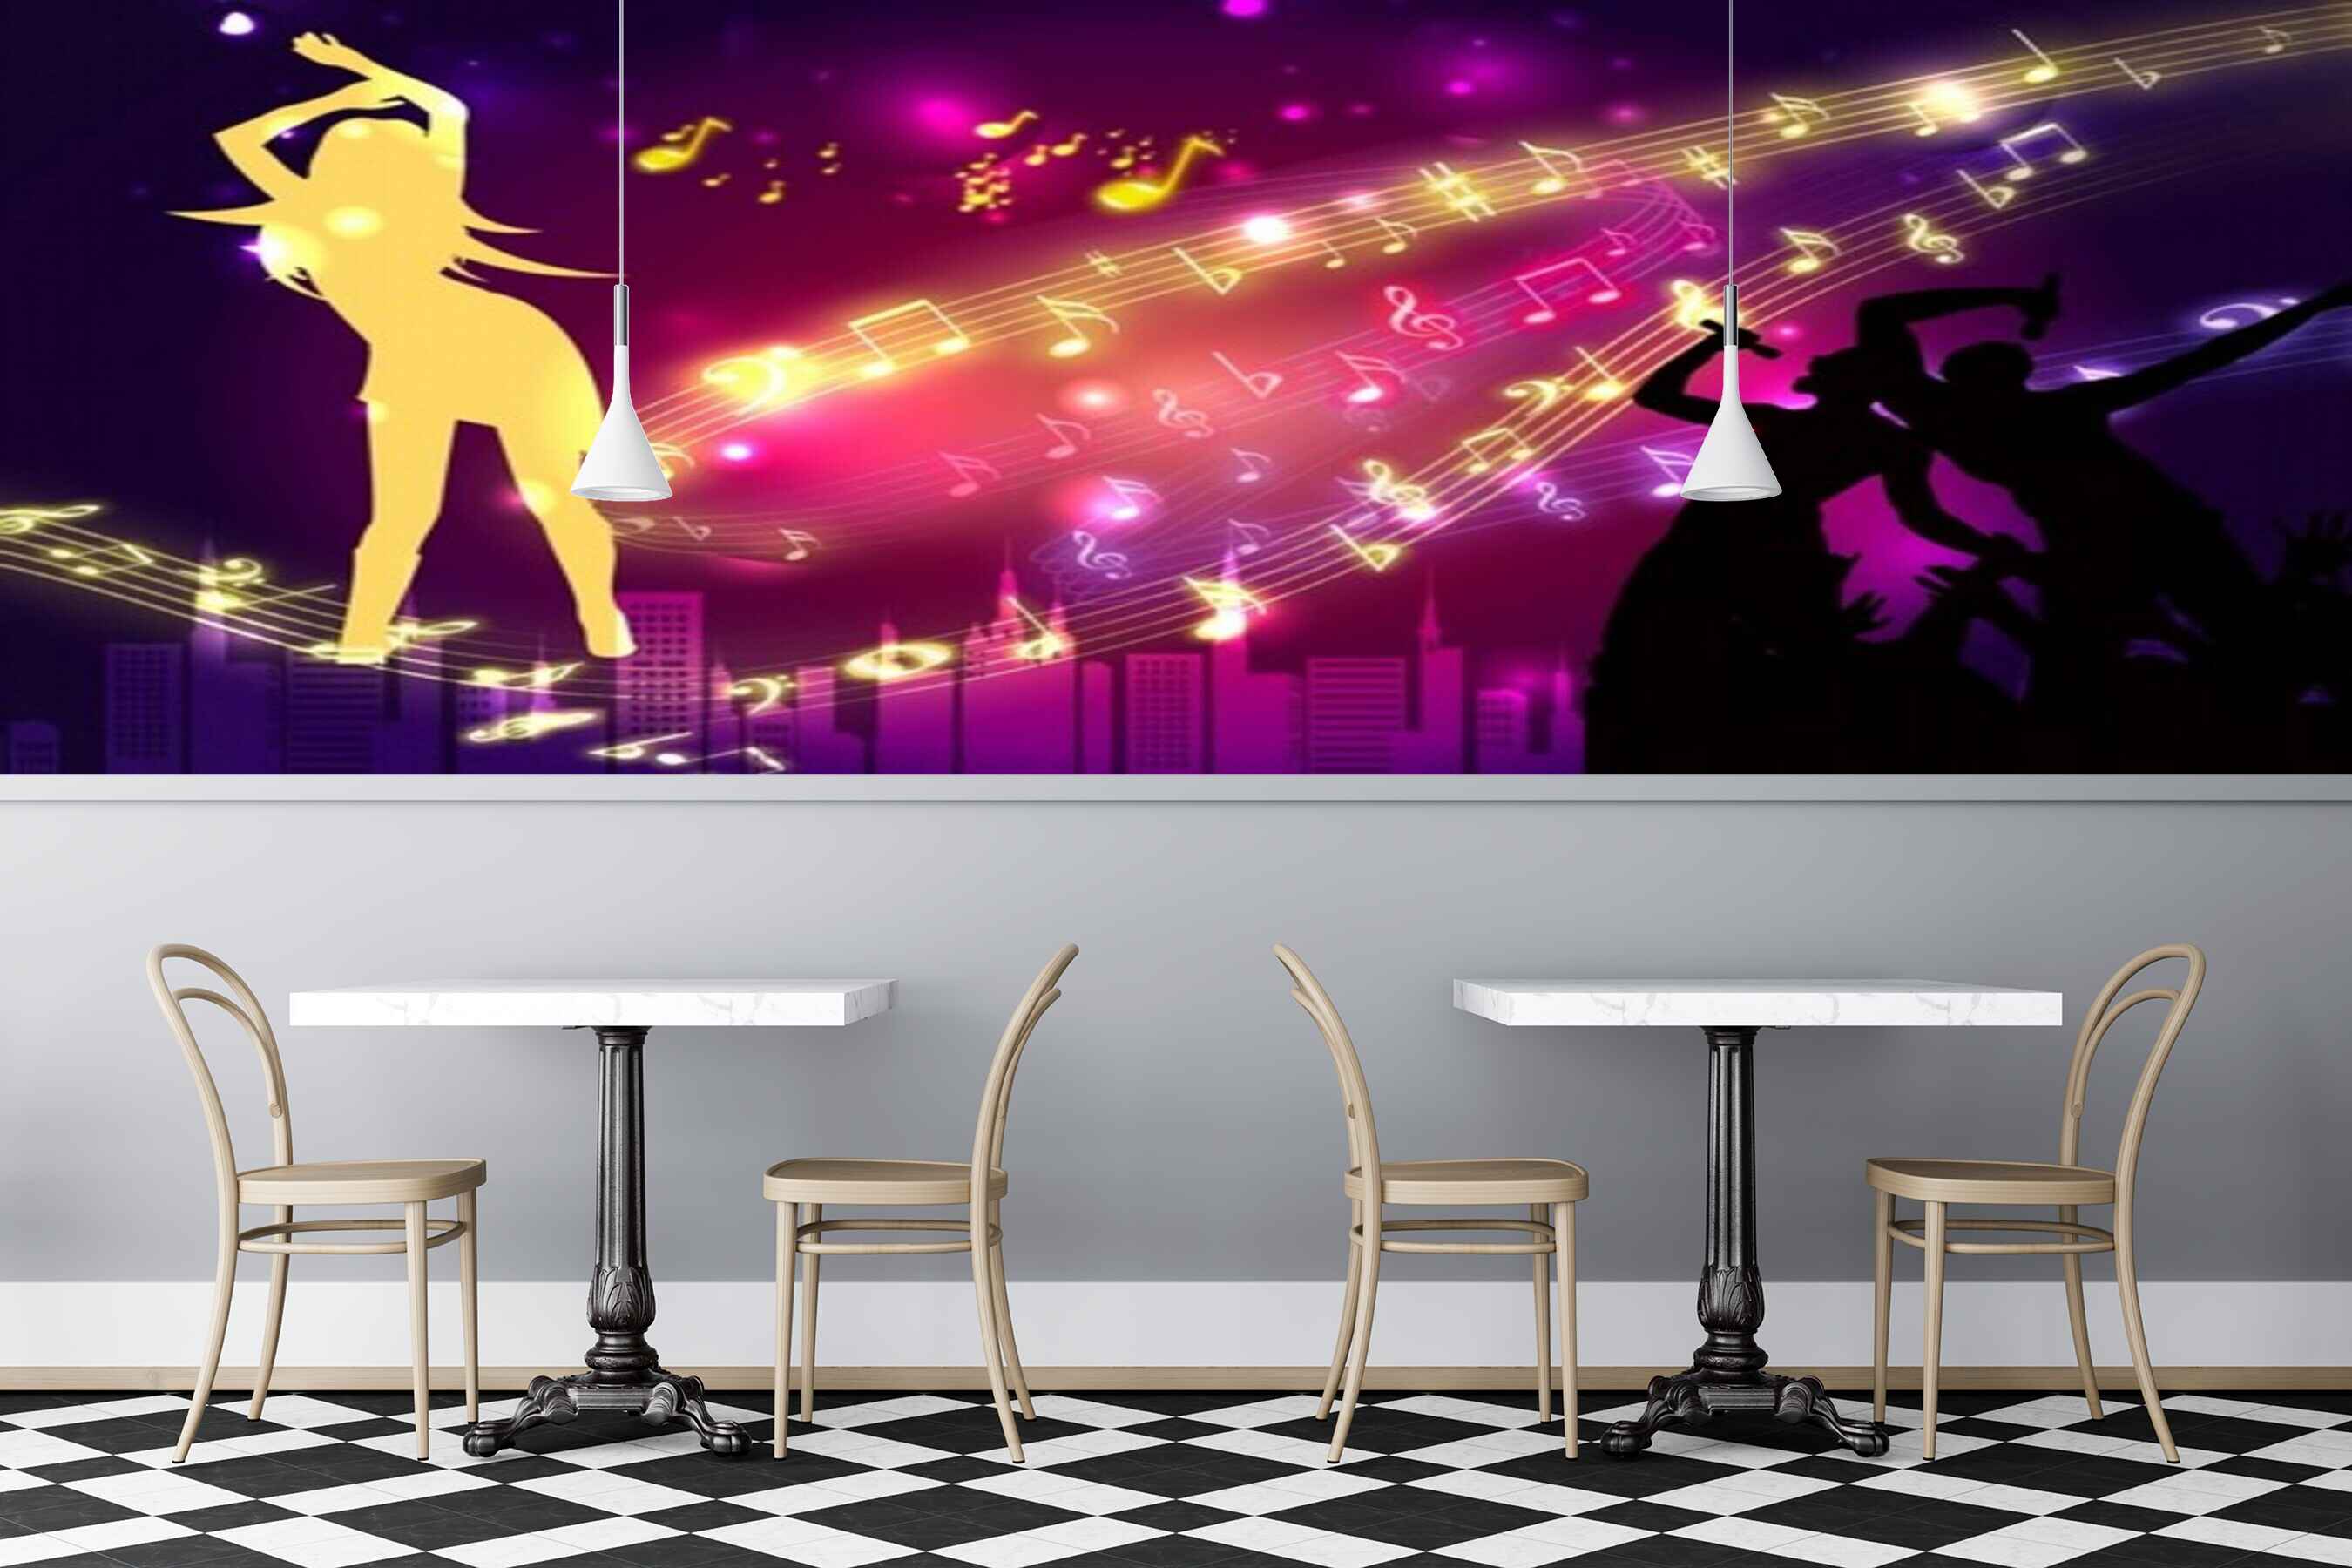 Avikalp MWZ3536 Singing Music Songs Mics HD Wallpaper for Disco Club Karaoke